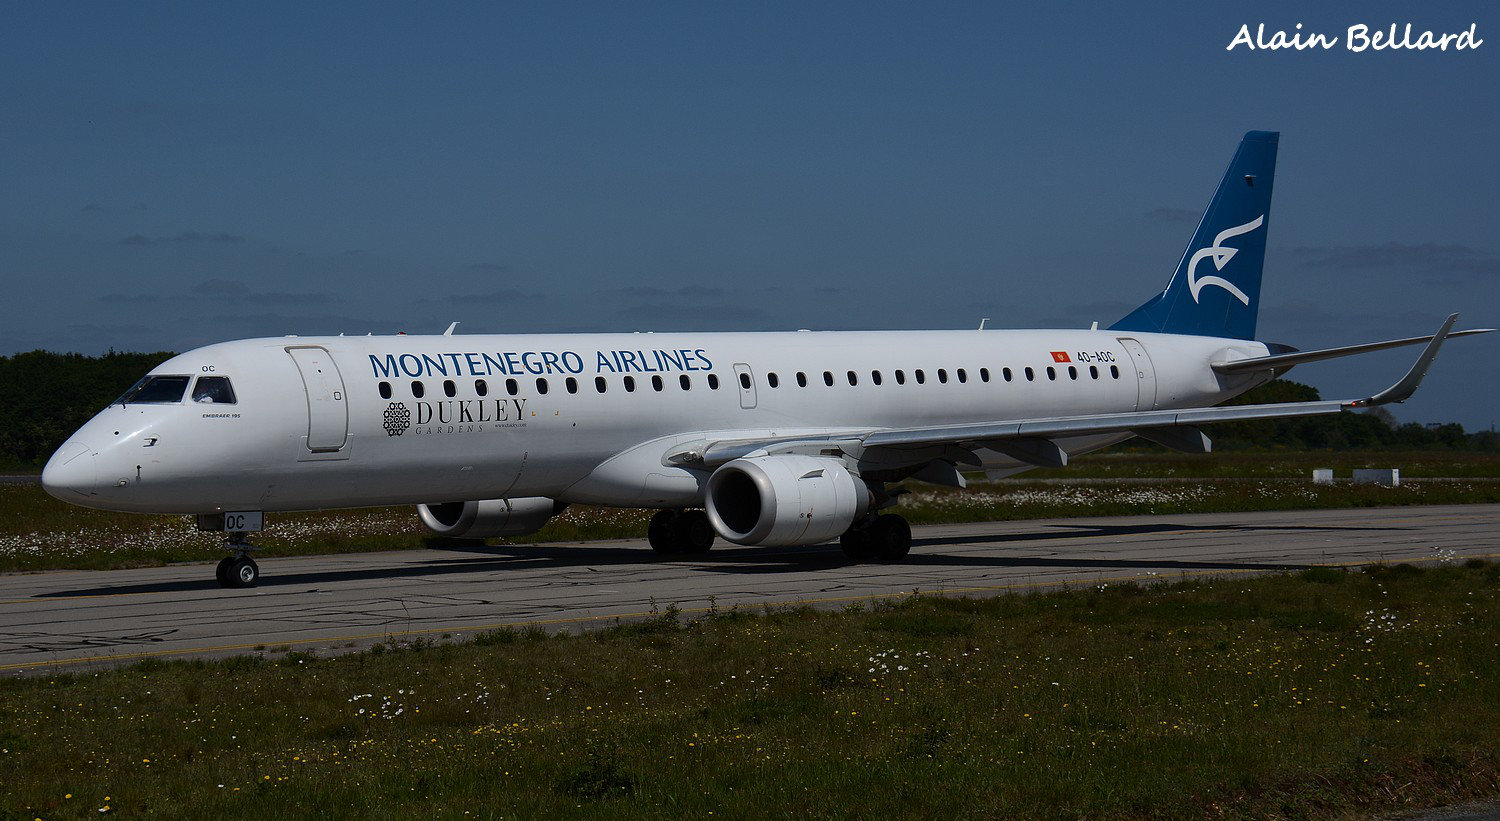 [17/05/2015] Embraer 190-200LR (4O-AOC) Montenegro Airlines "Dukley sticker" Vzzb